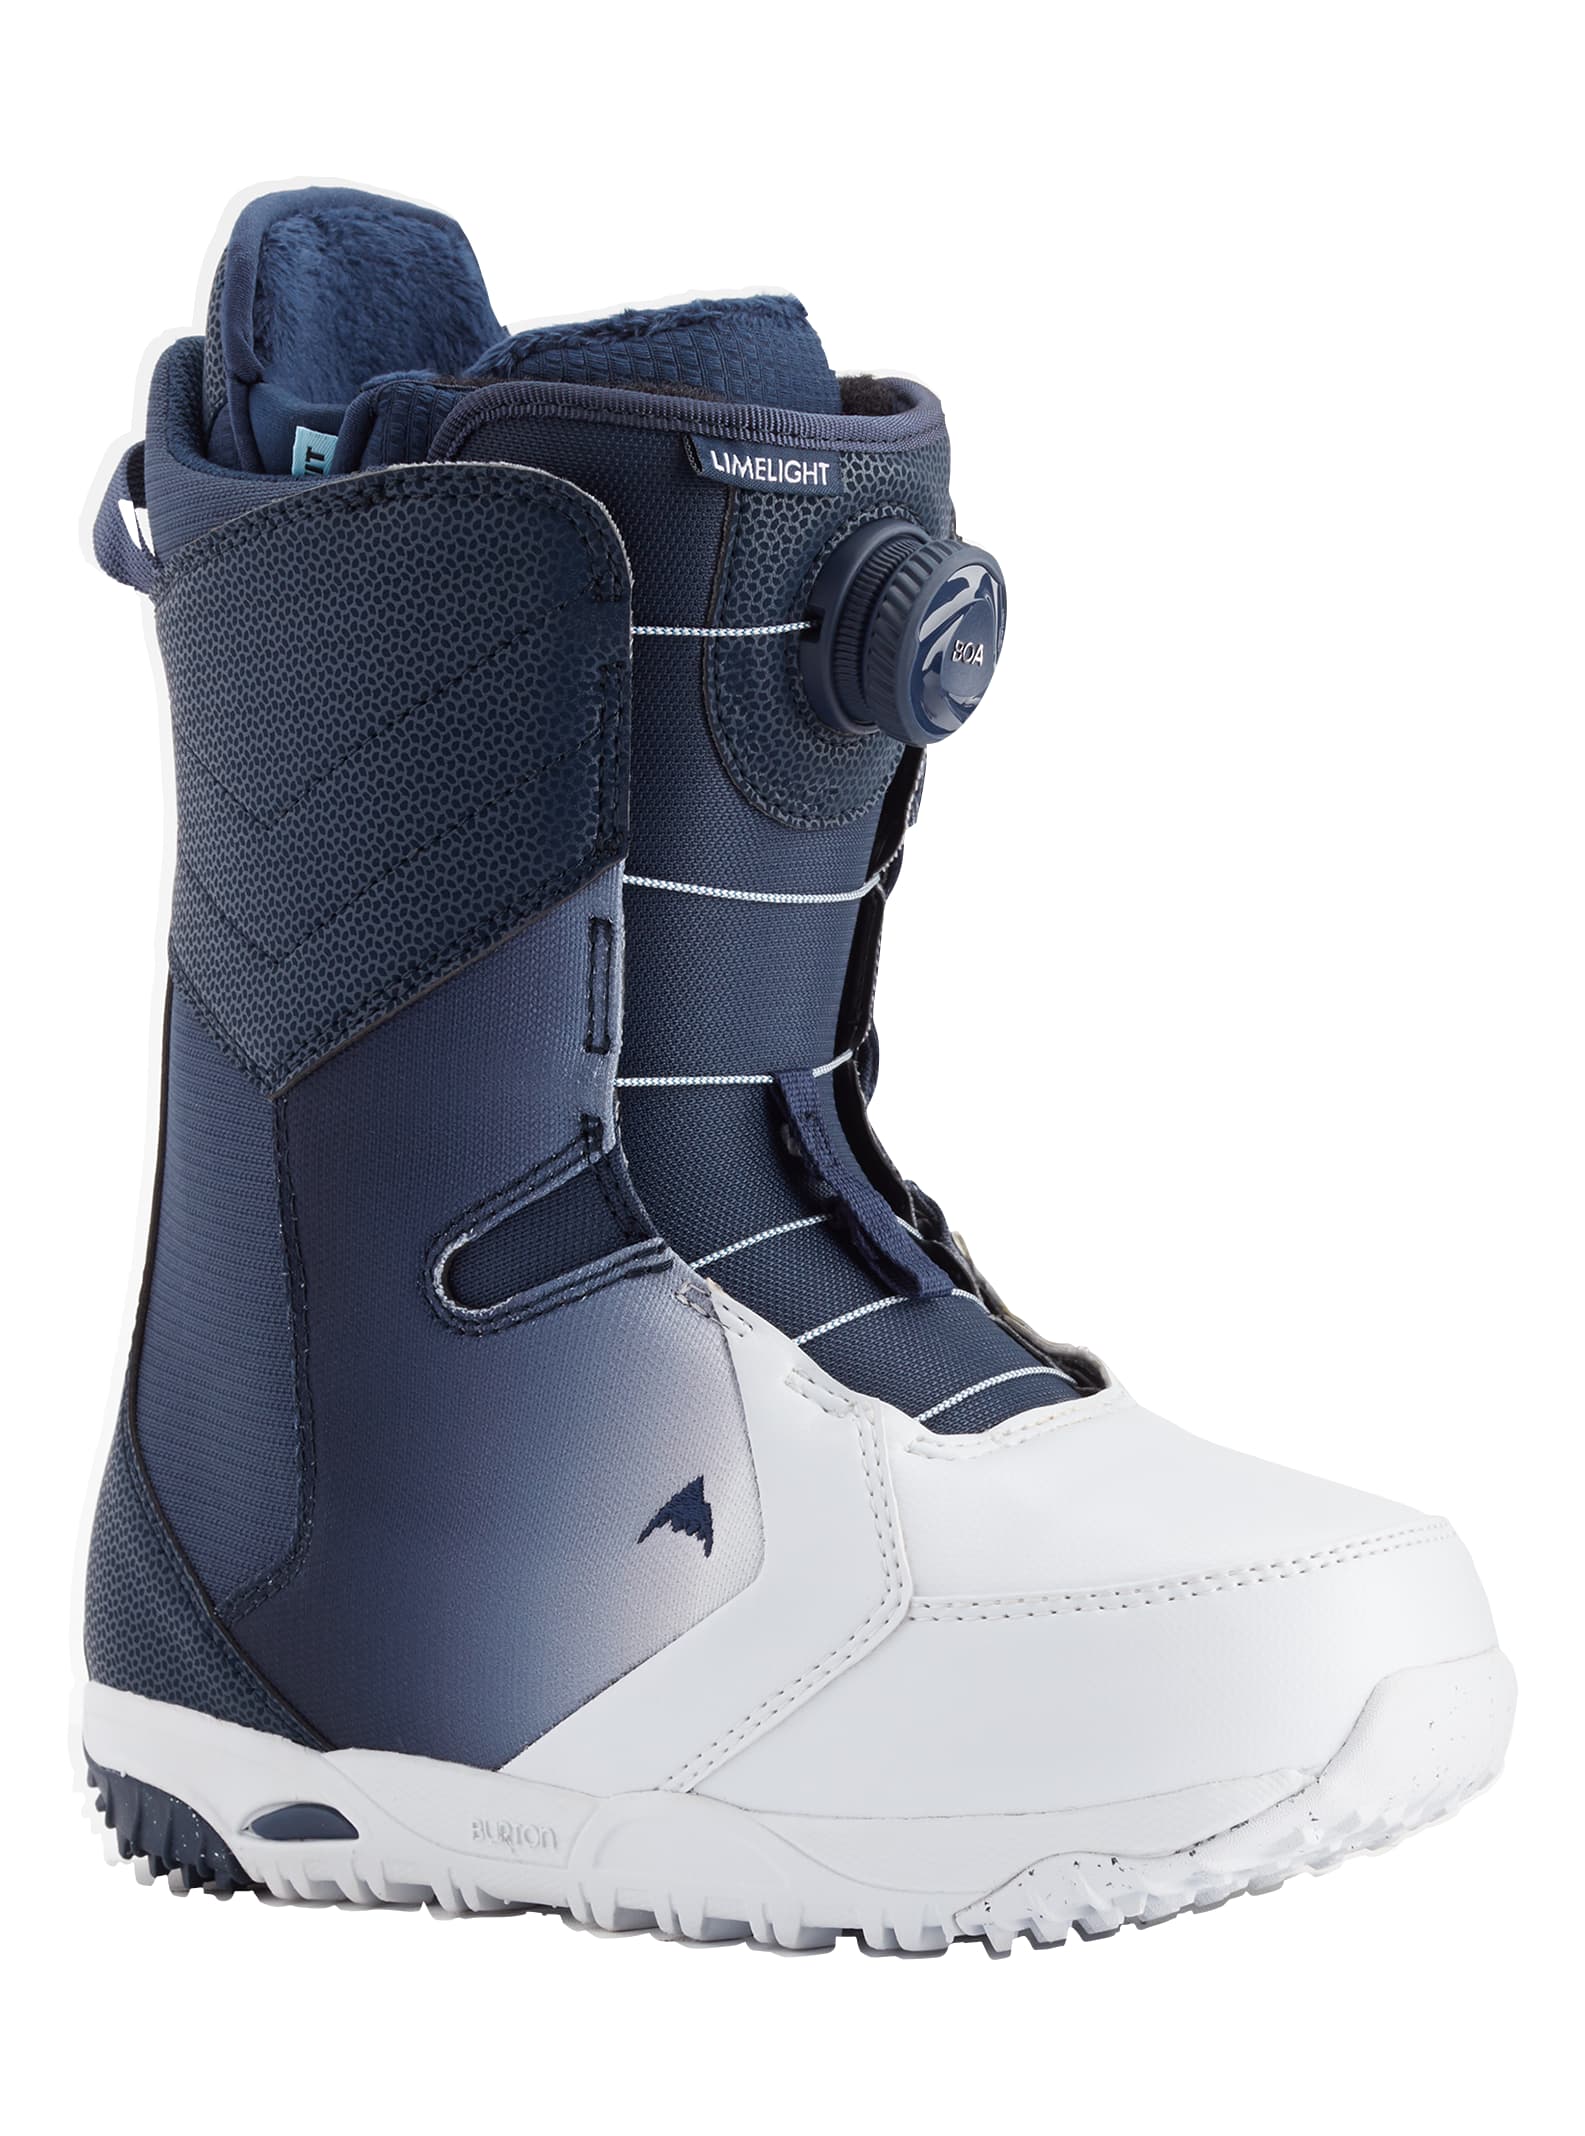 Snowboard Boots | Burton Snowboards 